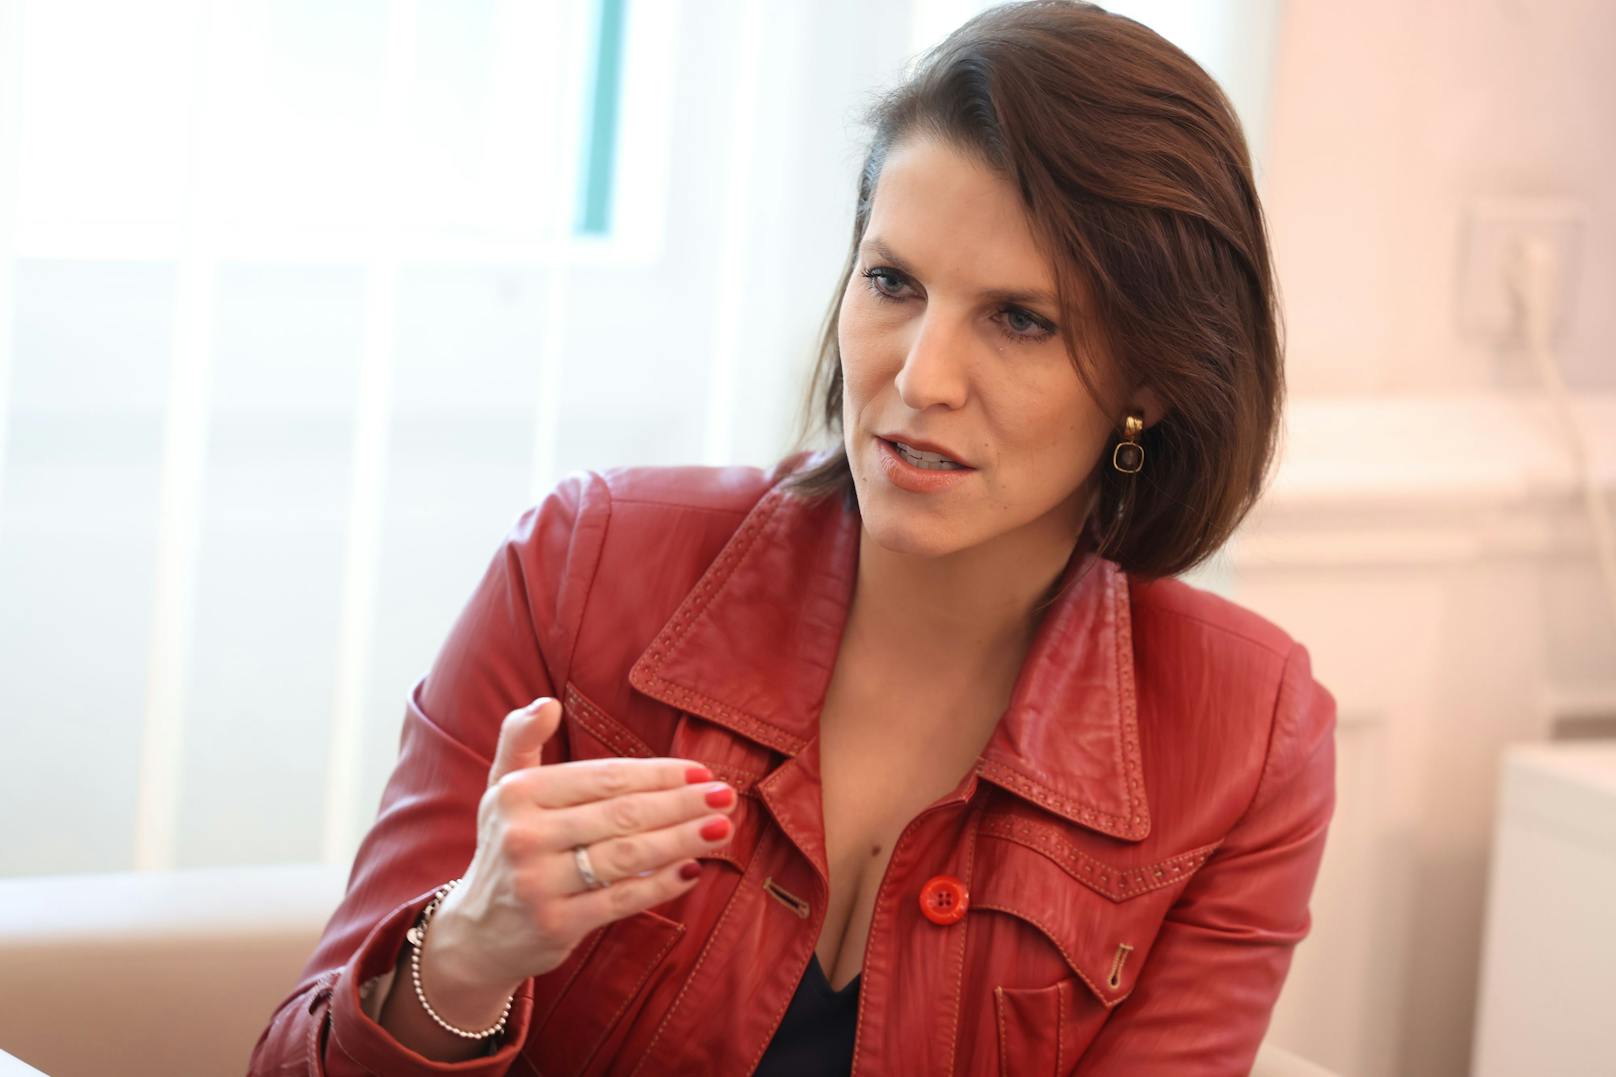 Verfassungsministerin Karoline Edtstadler im <em>"Heute"</em>-Interview